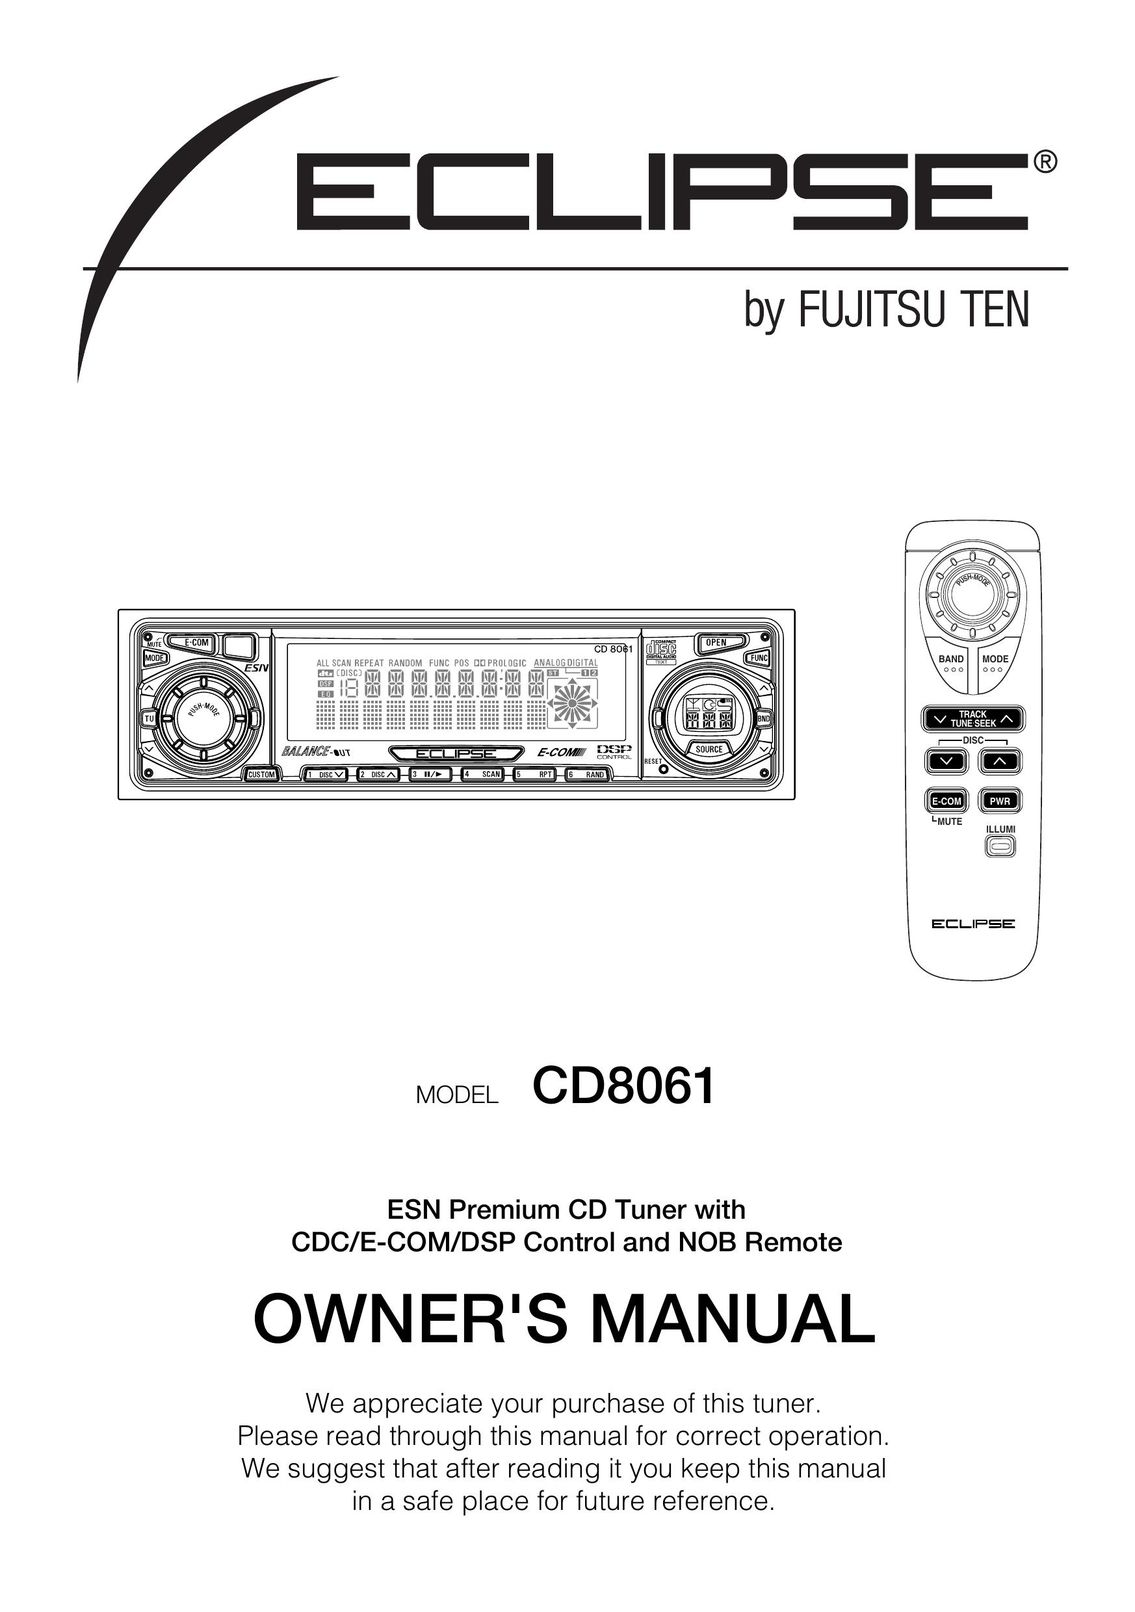 Eclipse - Fujitsu Ten CD8061 Car Stereo System User Manual